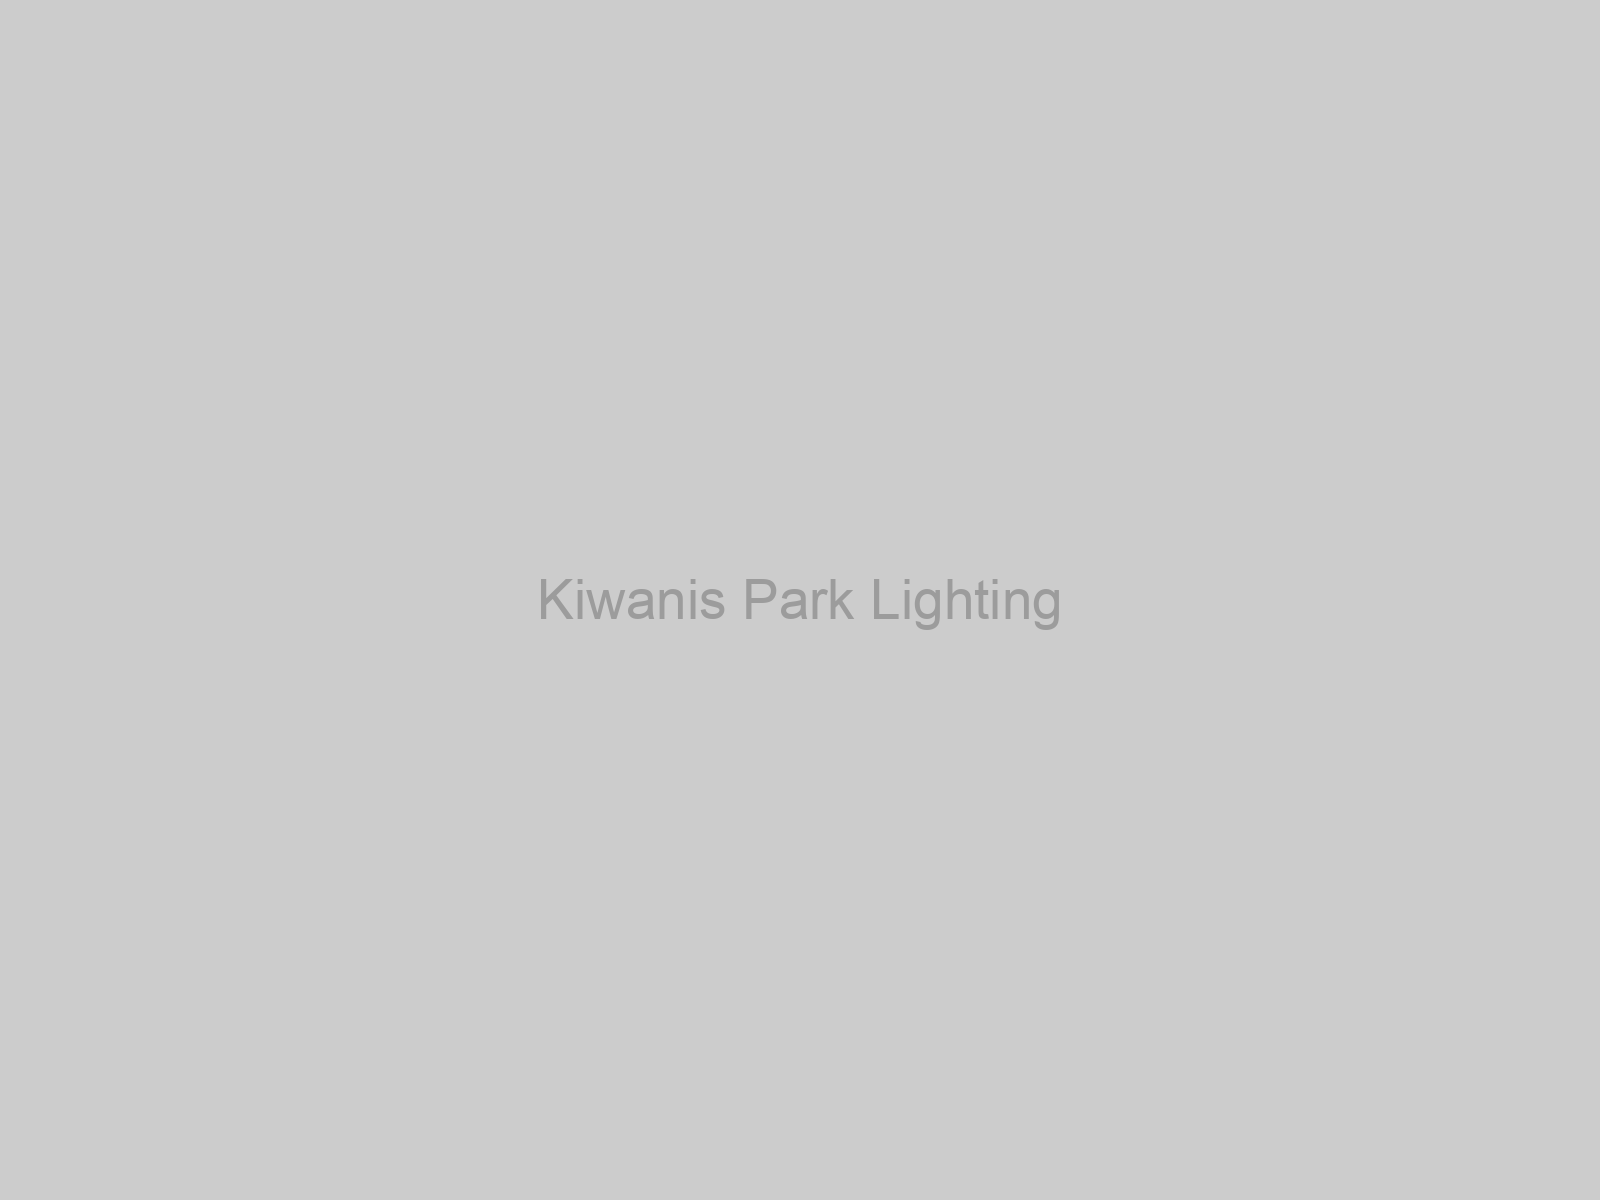 Kiwanis Park Lighting